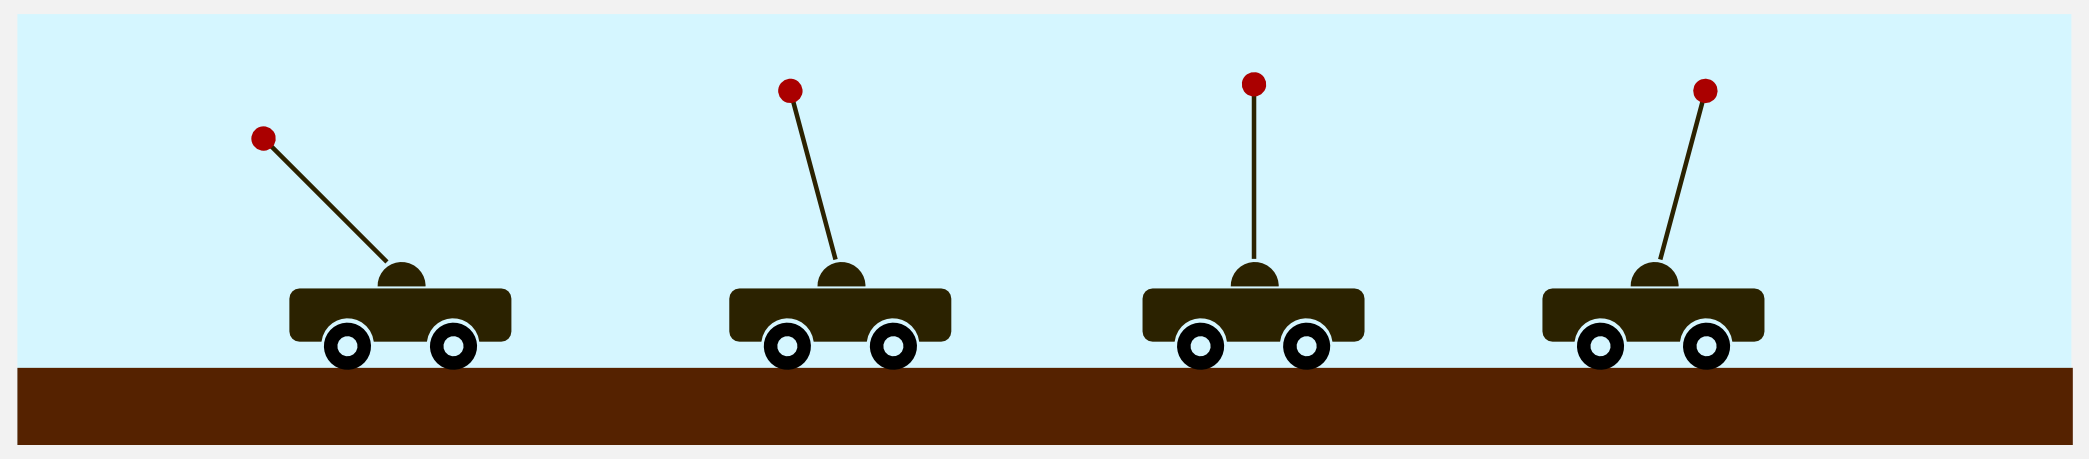 Reinforcement Learning Inverted Pendulum Illustration